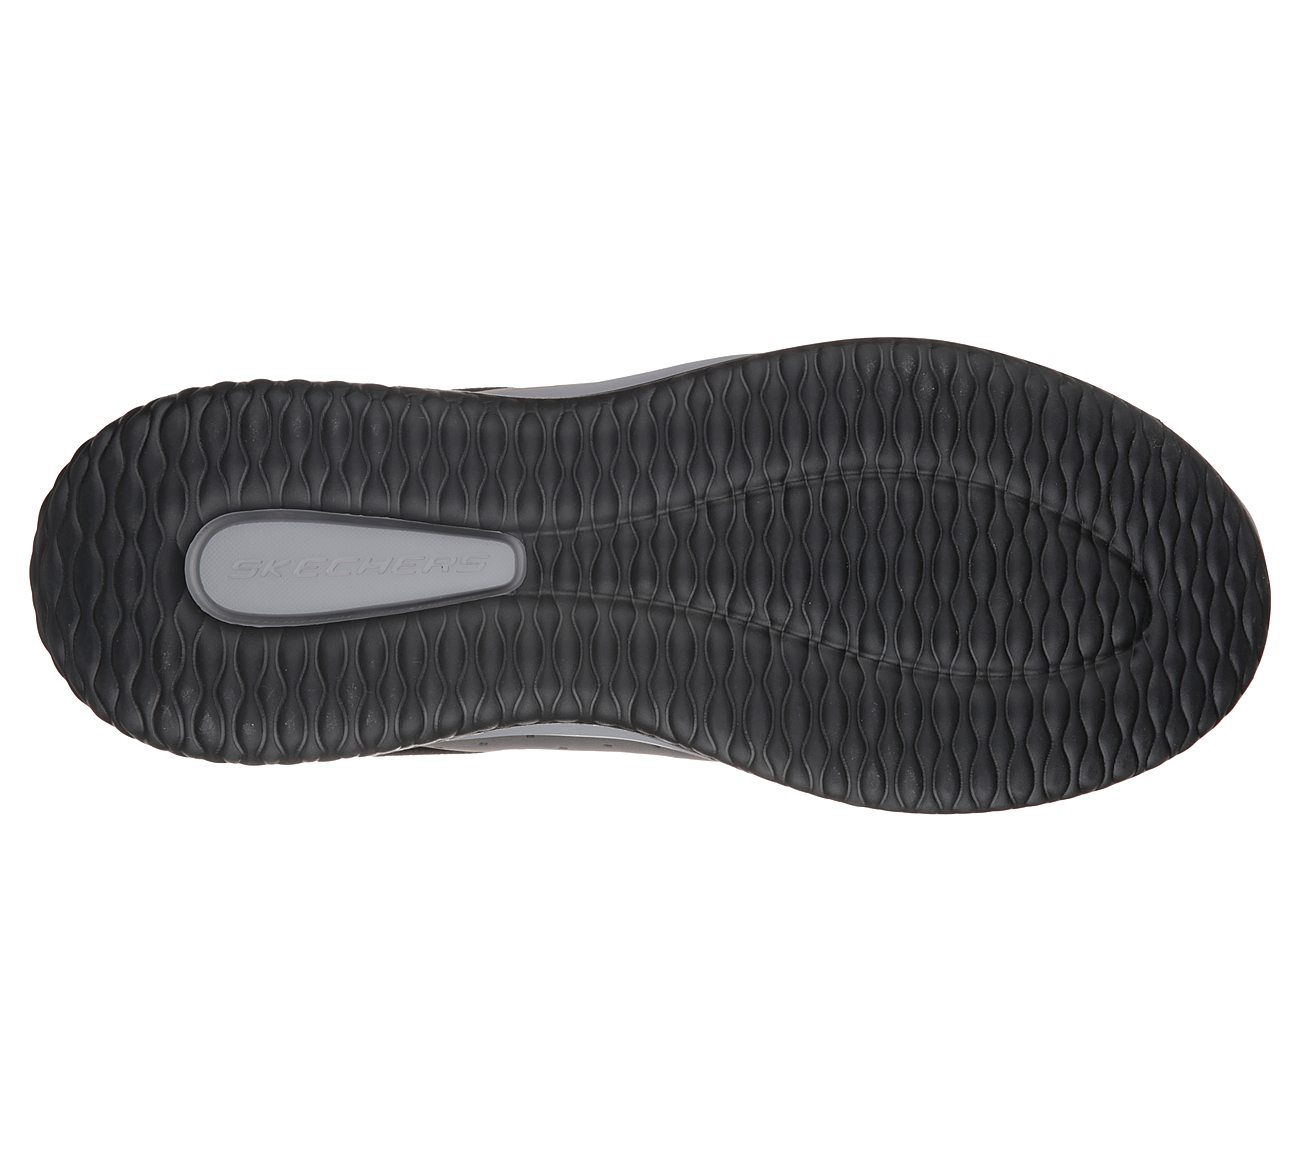 DELSON- CAMBEN, BLACK/GREY Footwear Bottom View